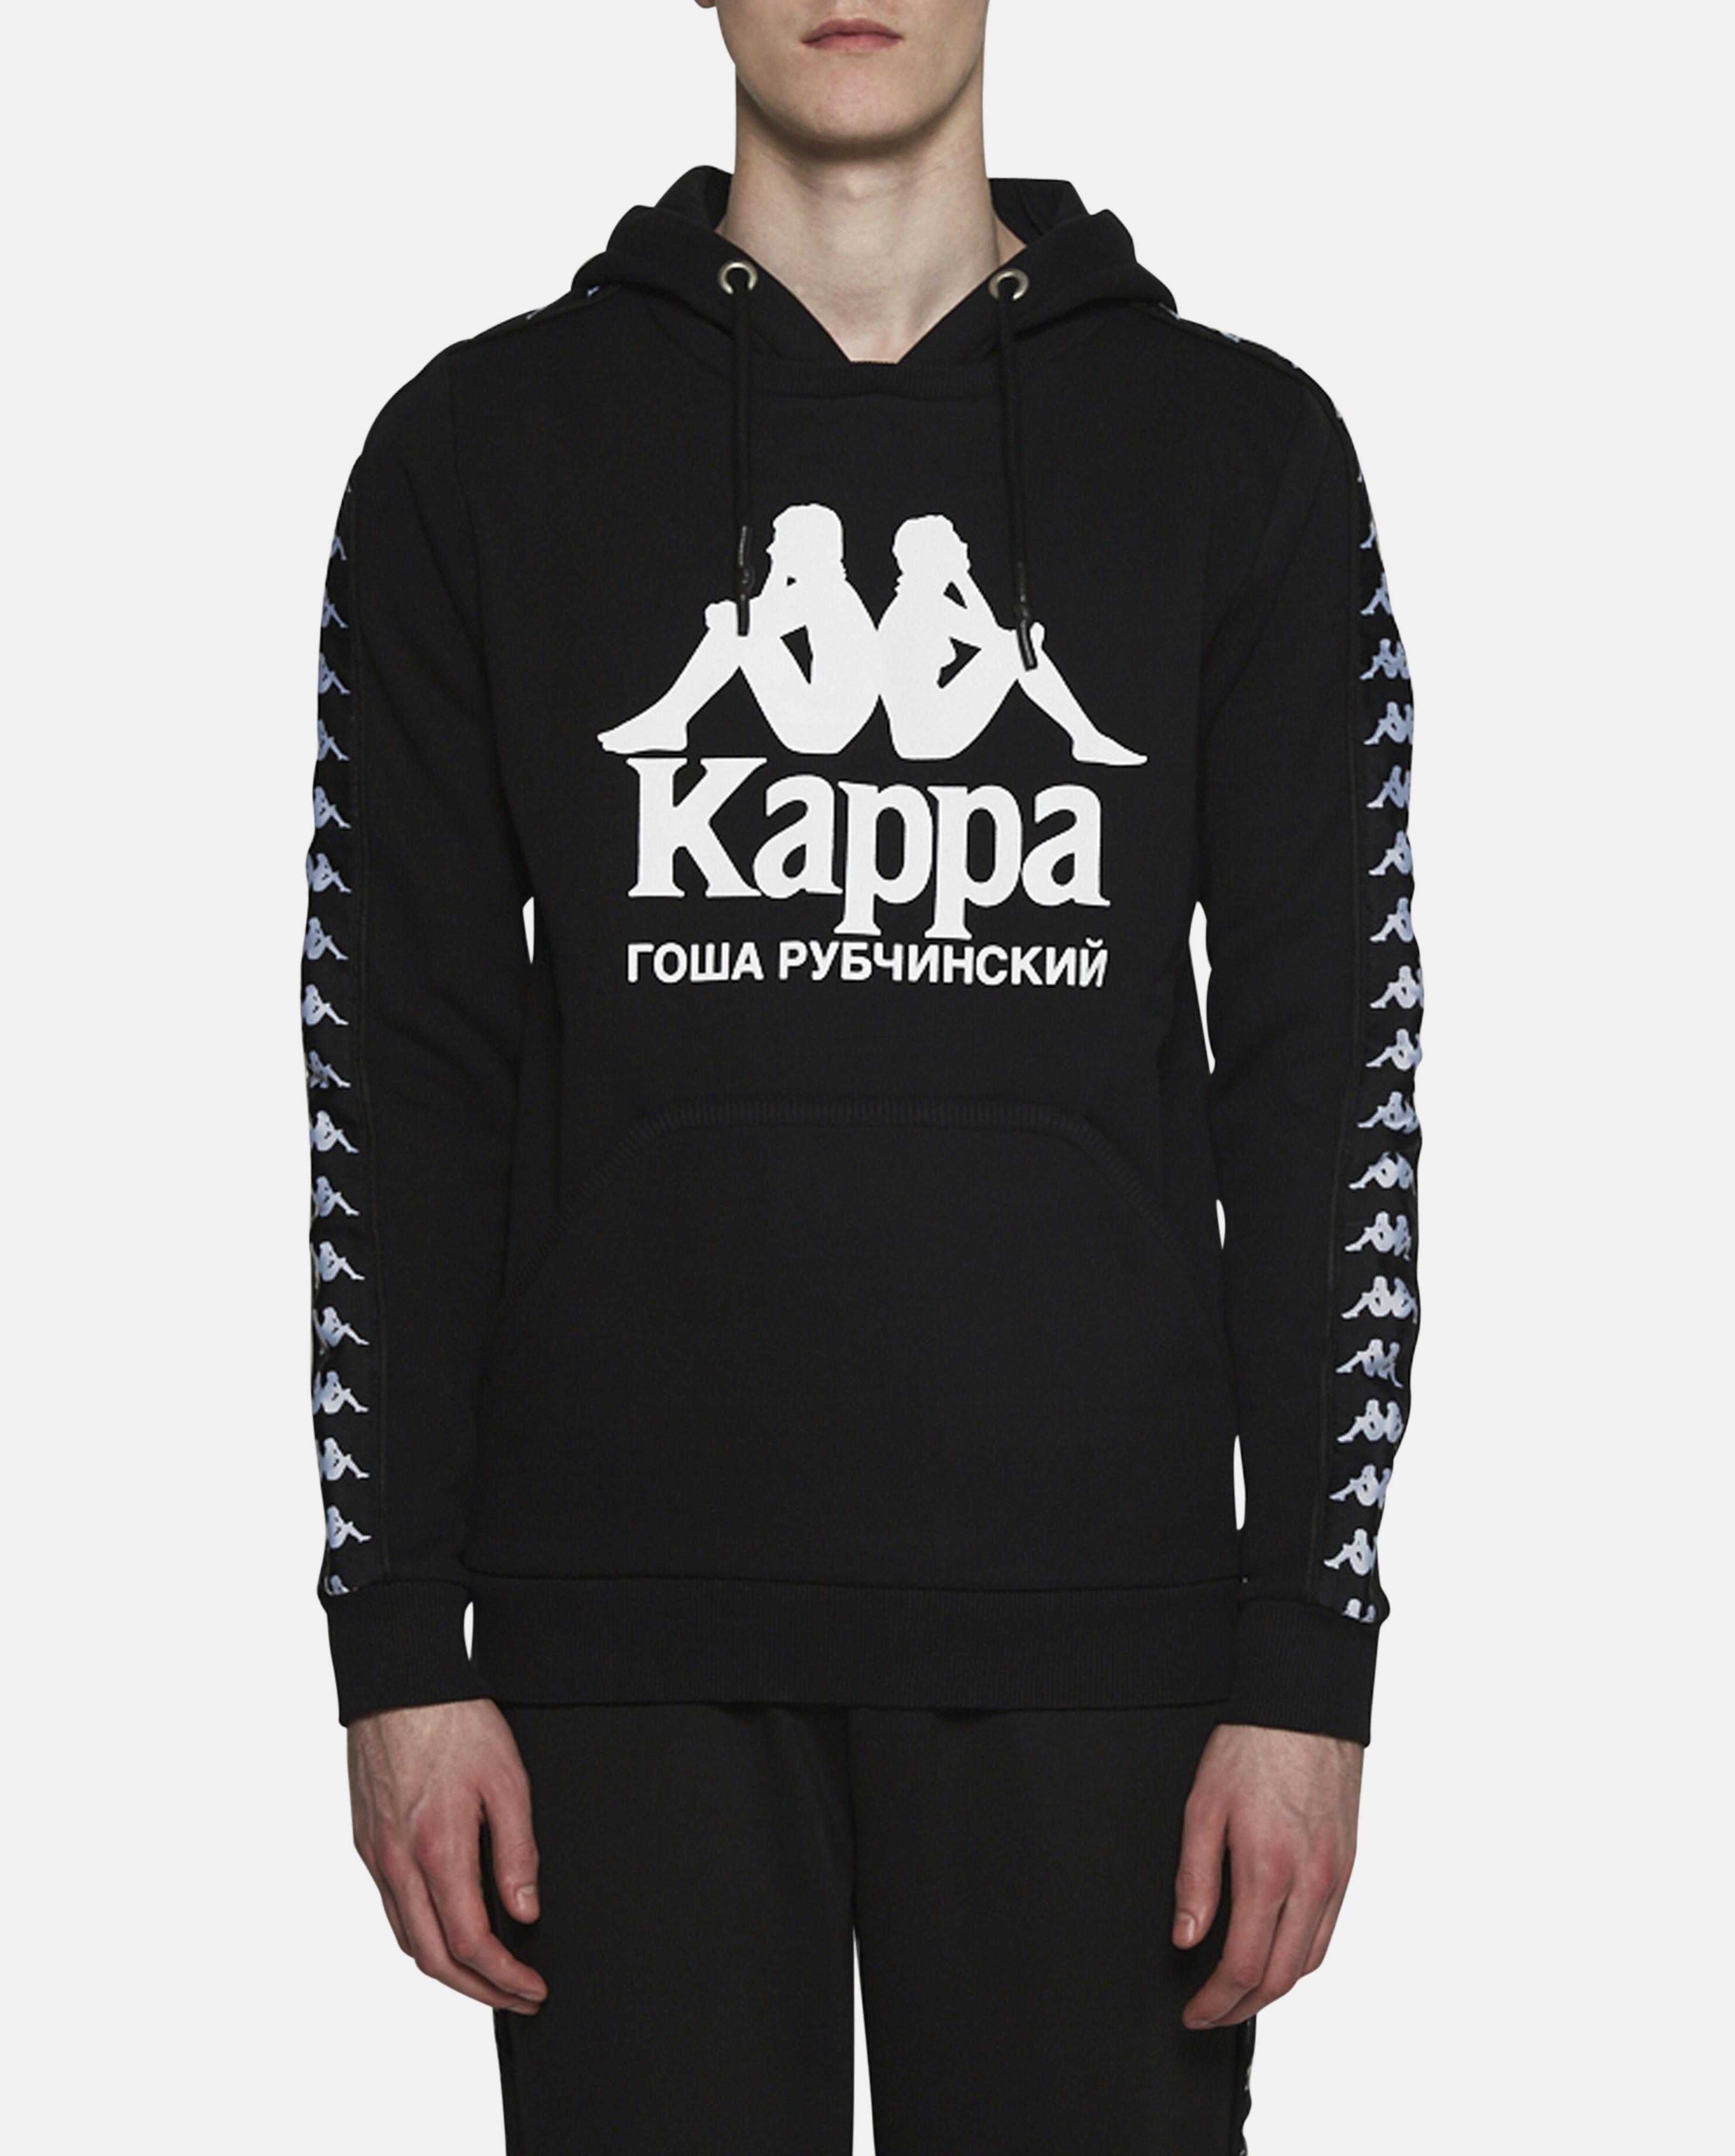 Kappa Hoodie Black Factory Sale, SAVE 34% - adapostolica.org